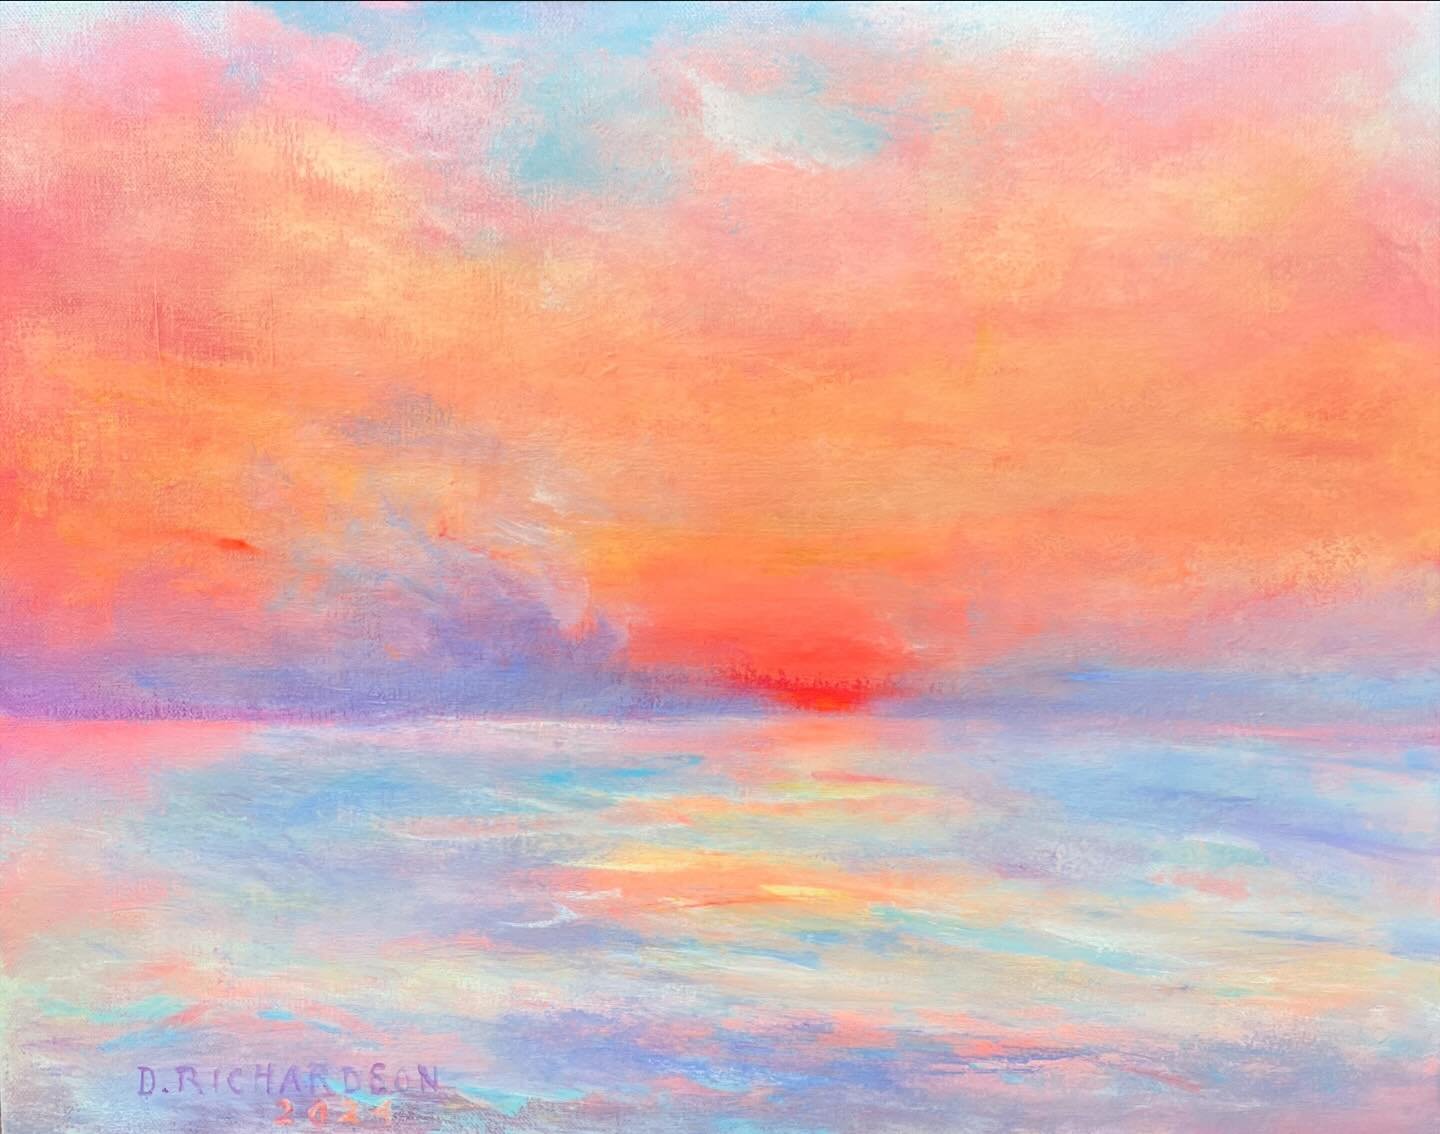 a sunrise
in acrylic gouache on canvas  16&rdquo; x 20&rdquo; 
#sun_rise  #newpainting  #sunrisesky #acrylicpainting  #affordableart #guildofcharlotteartists